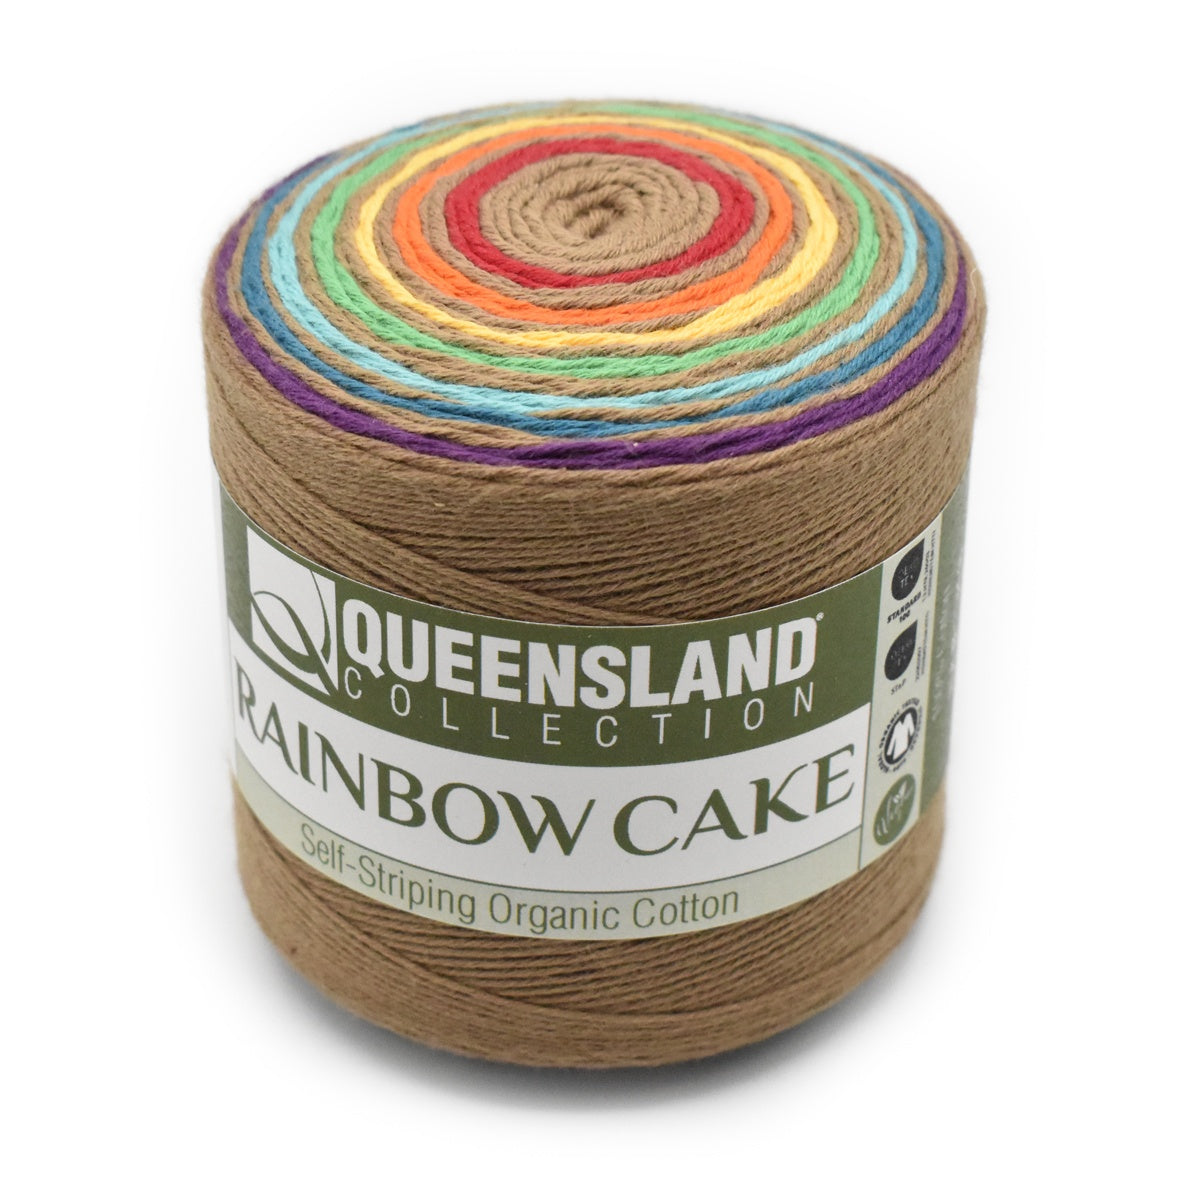 Queensland Collection Rainbow Cake